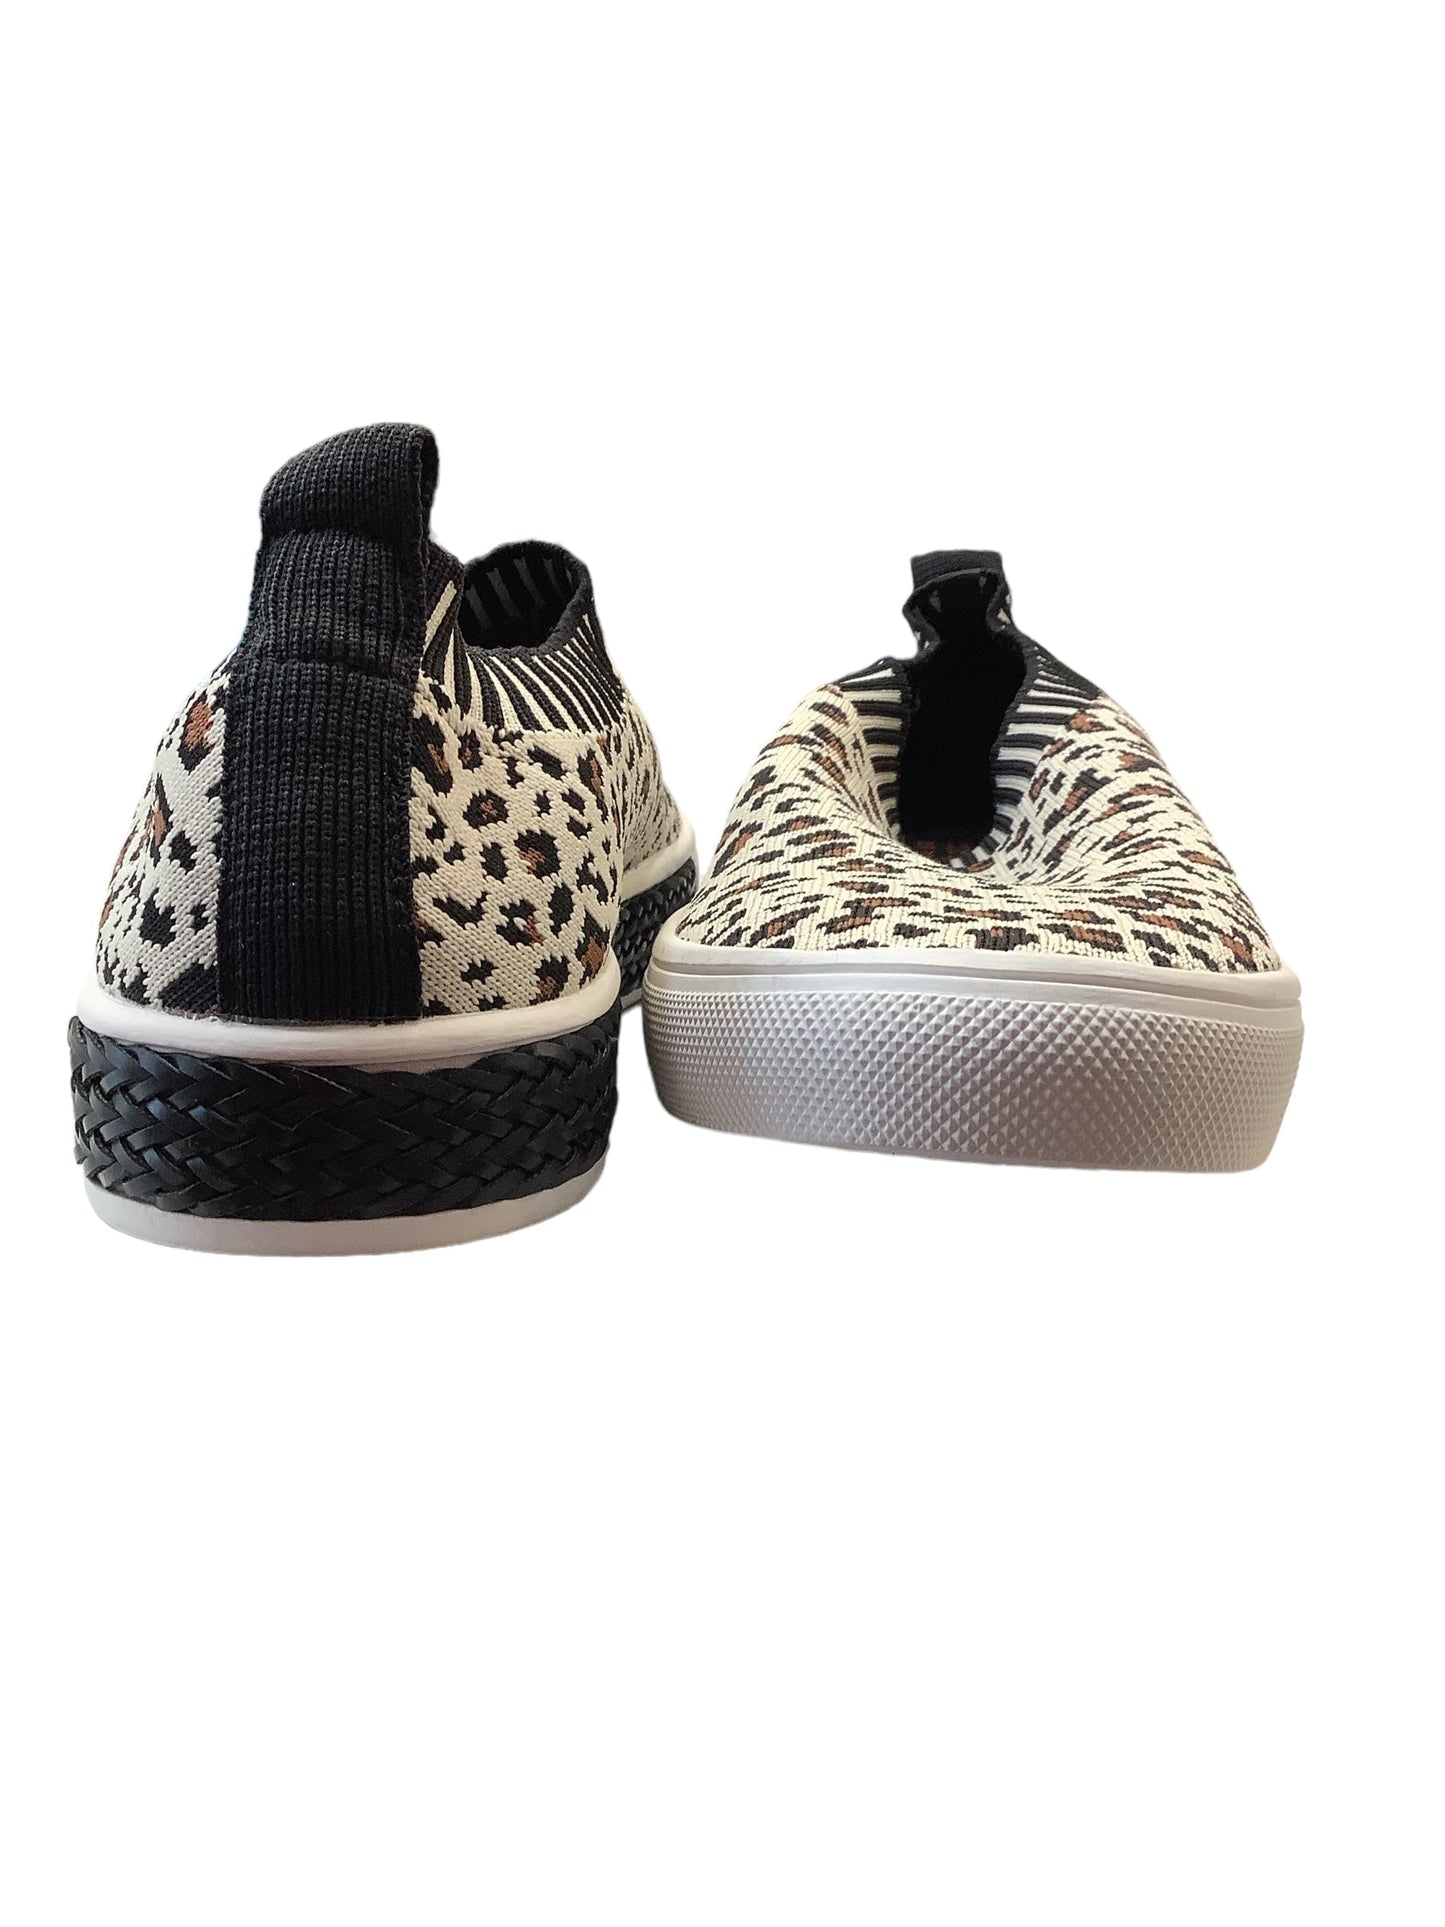 Animal Print Shoes Athletic Bernie Mev, Size 8-8.5(39)